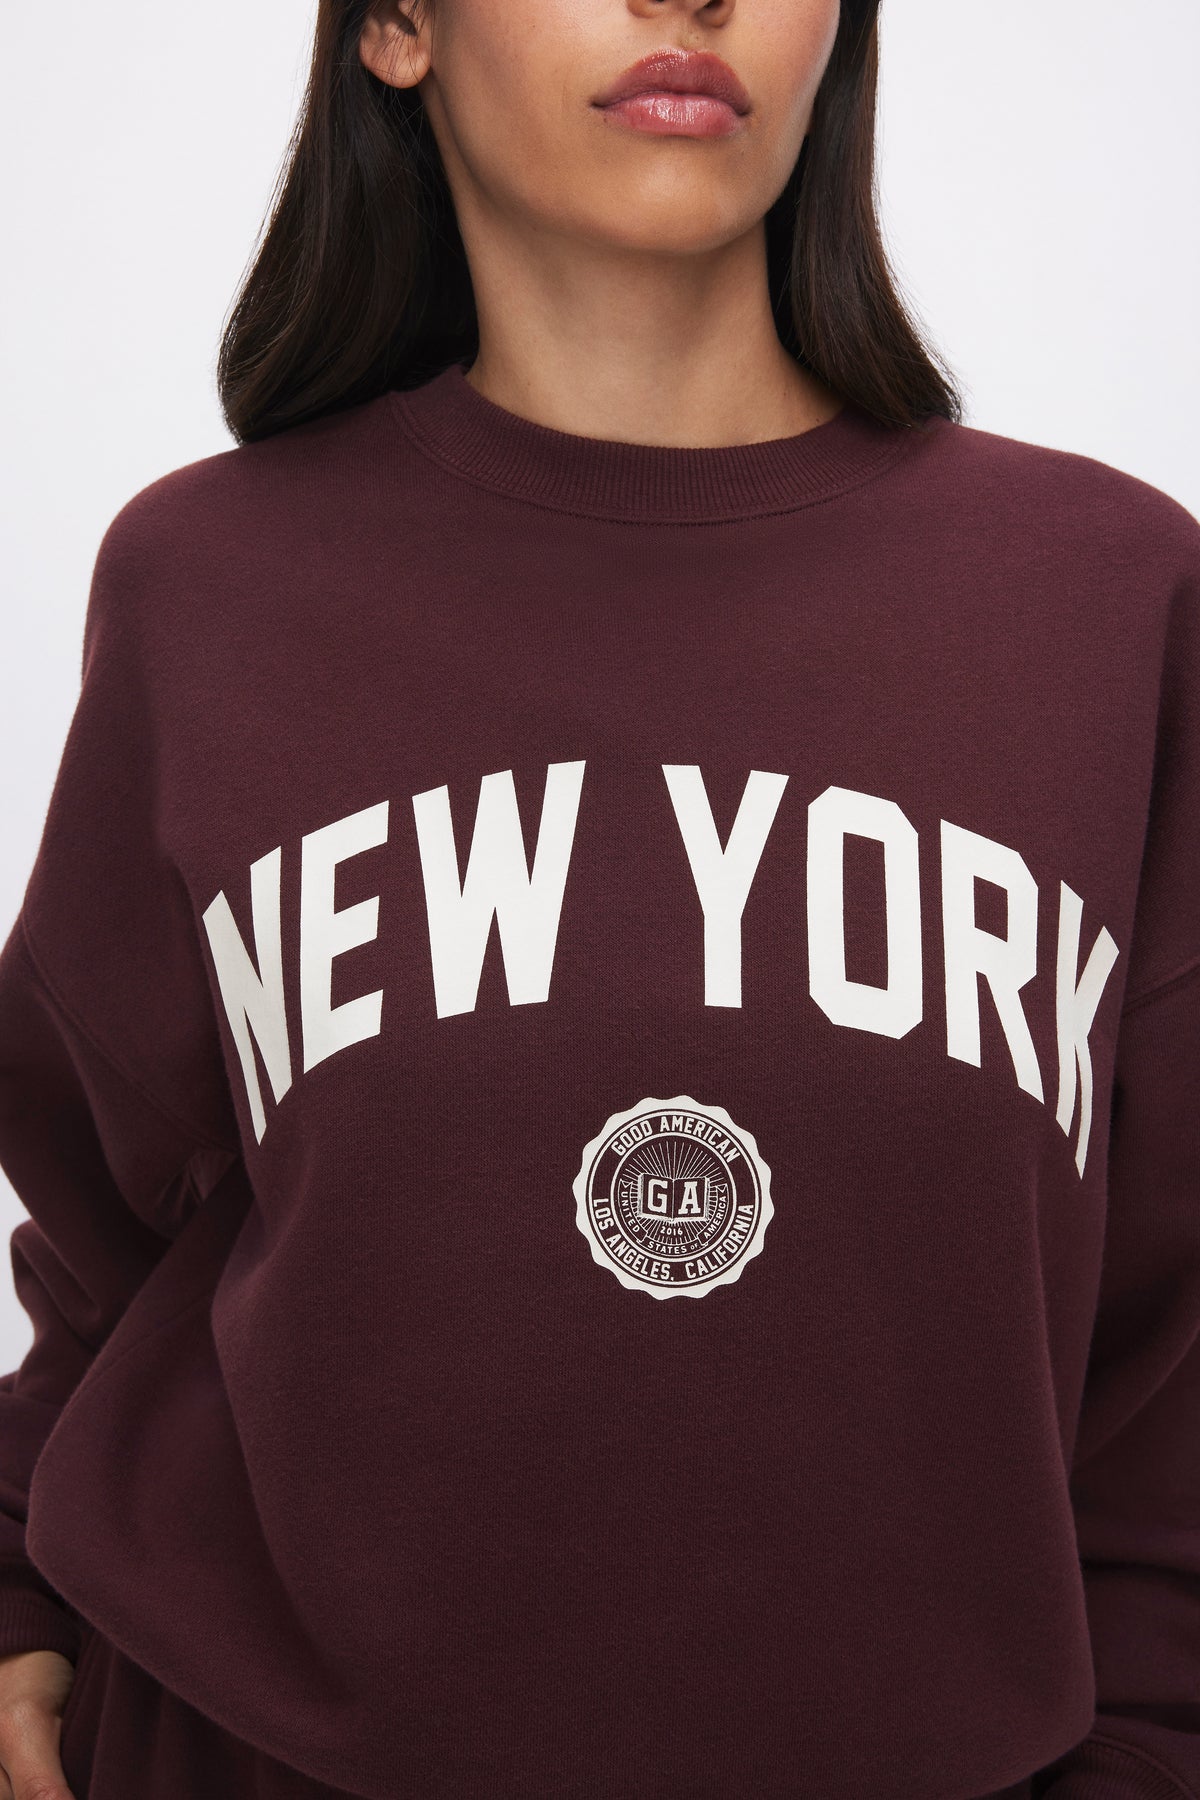 NY Yankees Hooded Sweatshirt, Womans Pink Sweatshirt Size 12 to 14